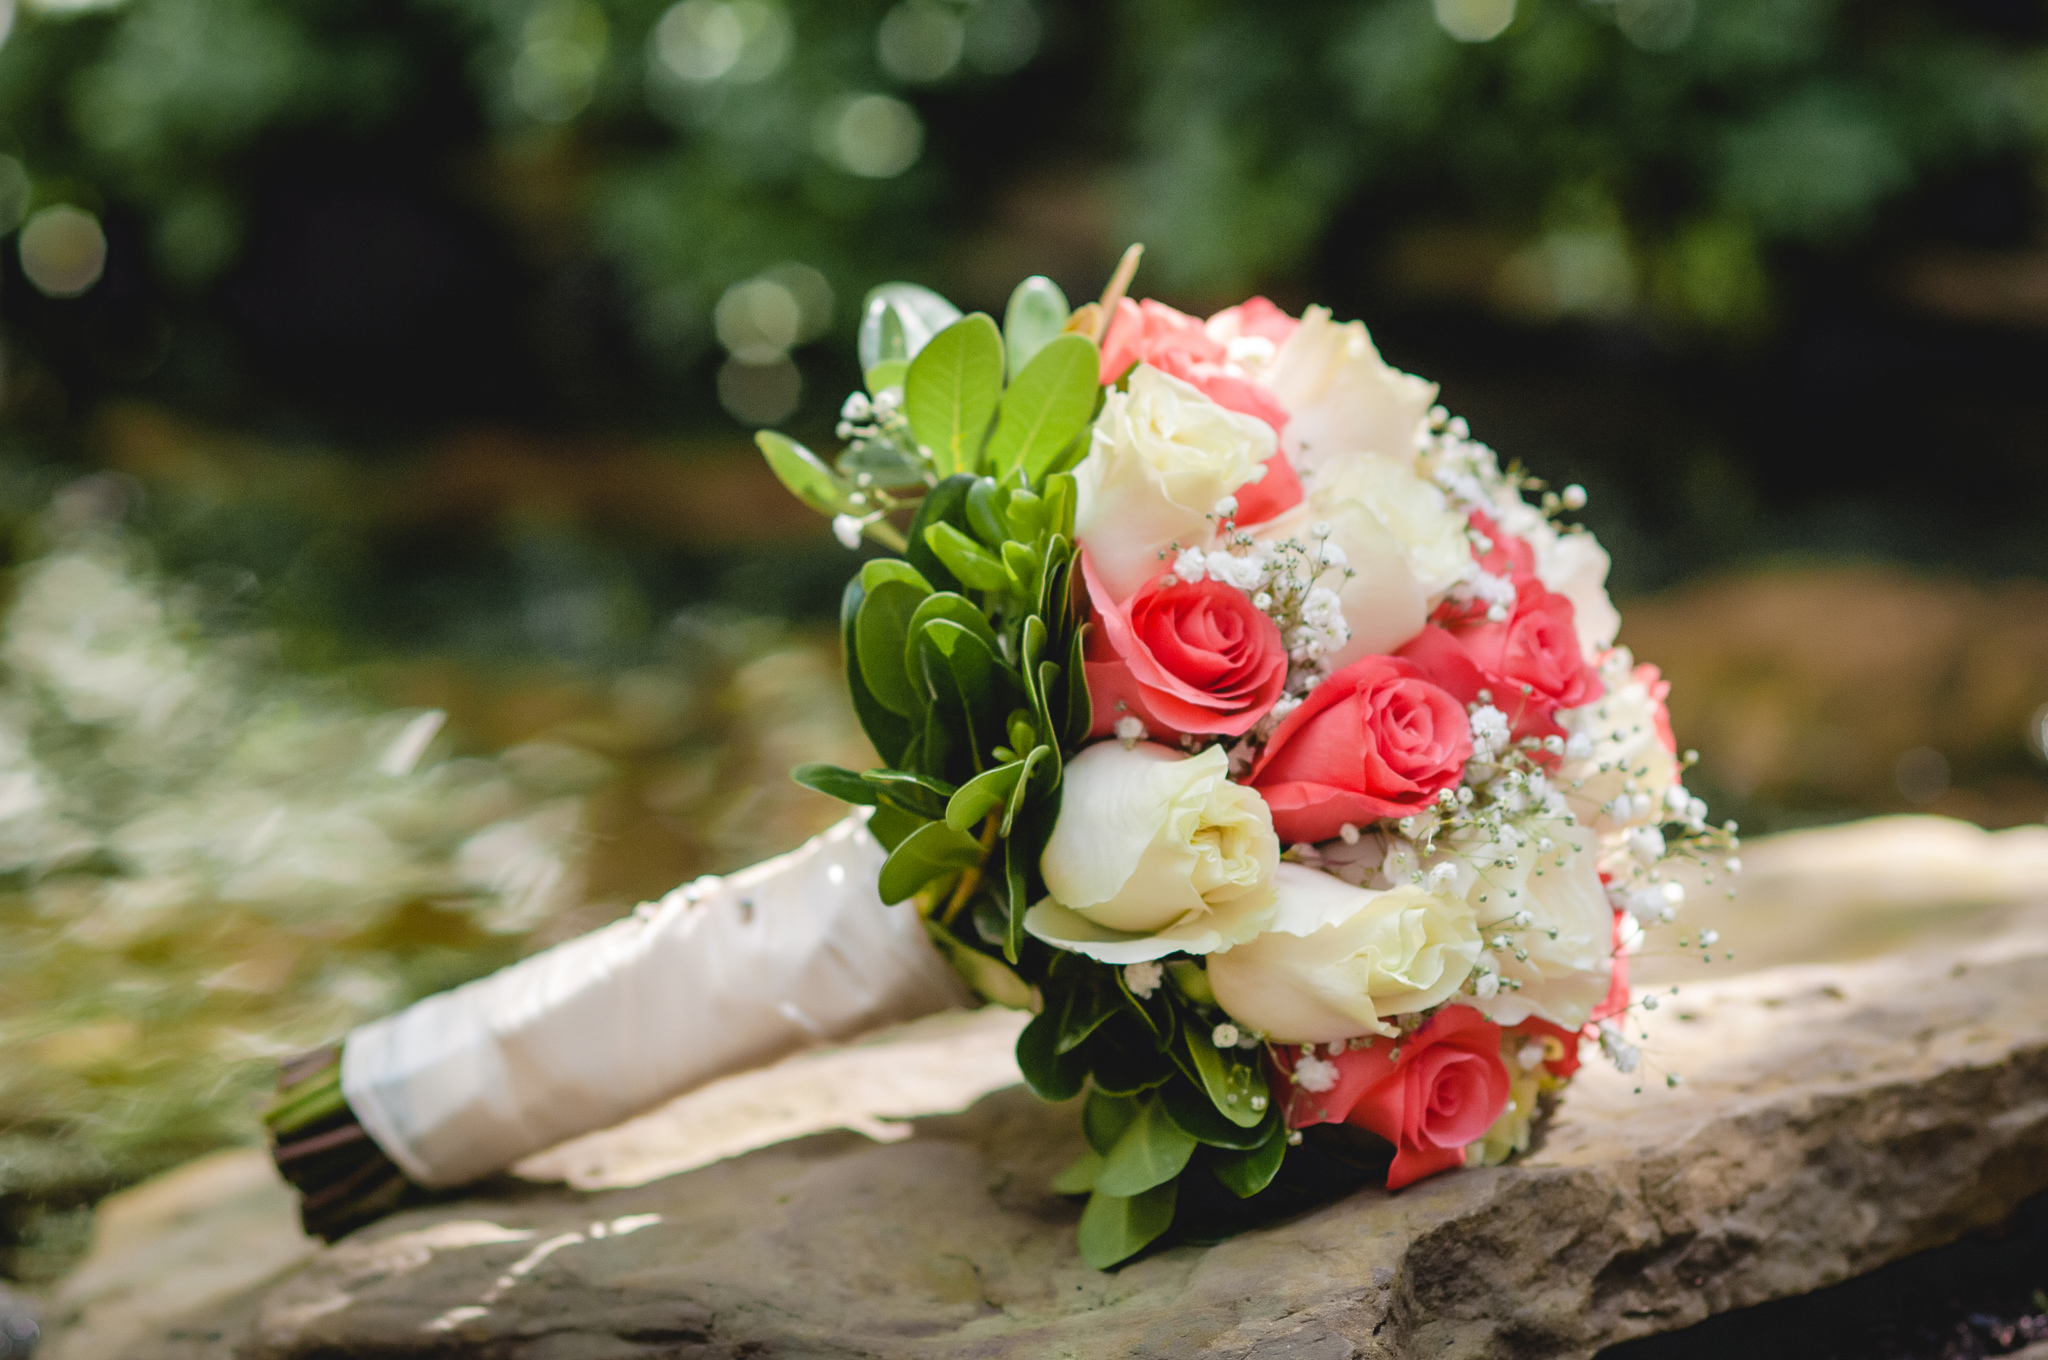 Bride's bouquet by Wallace Bethel Park Flowers